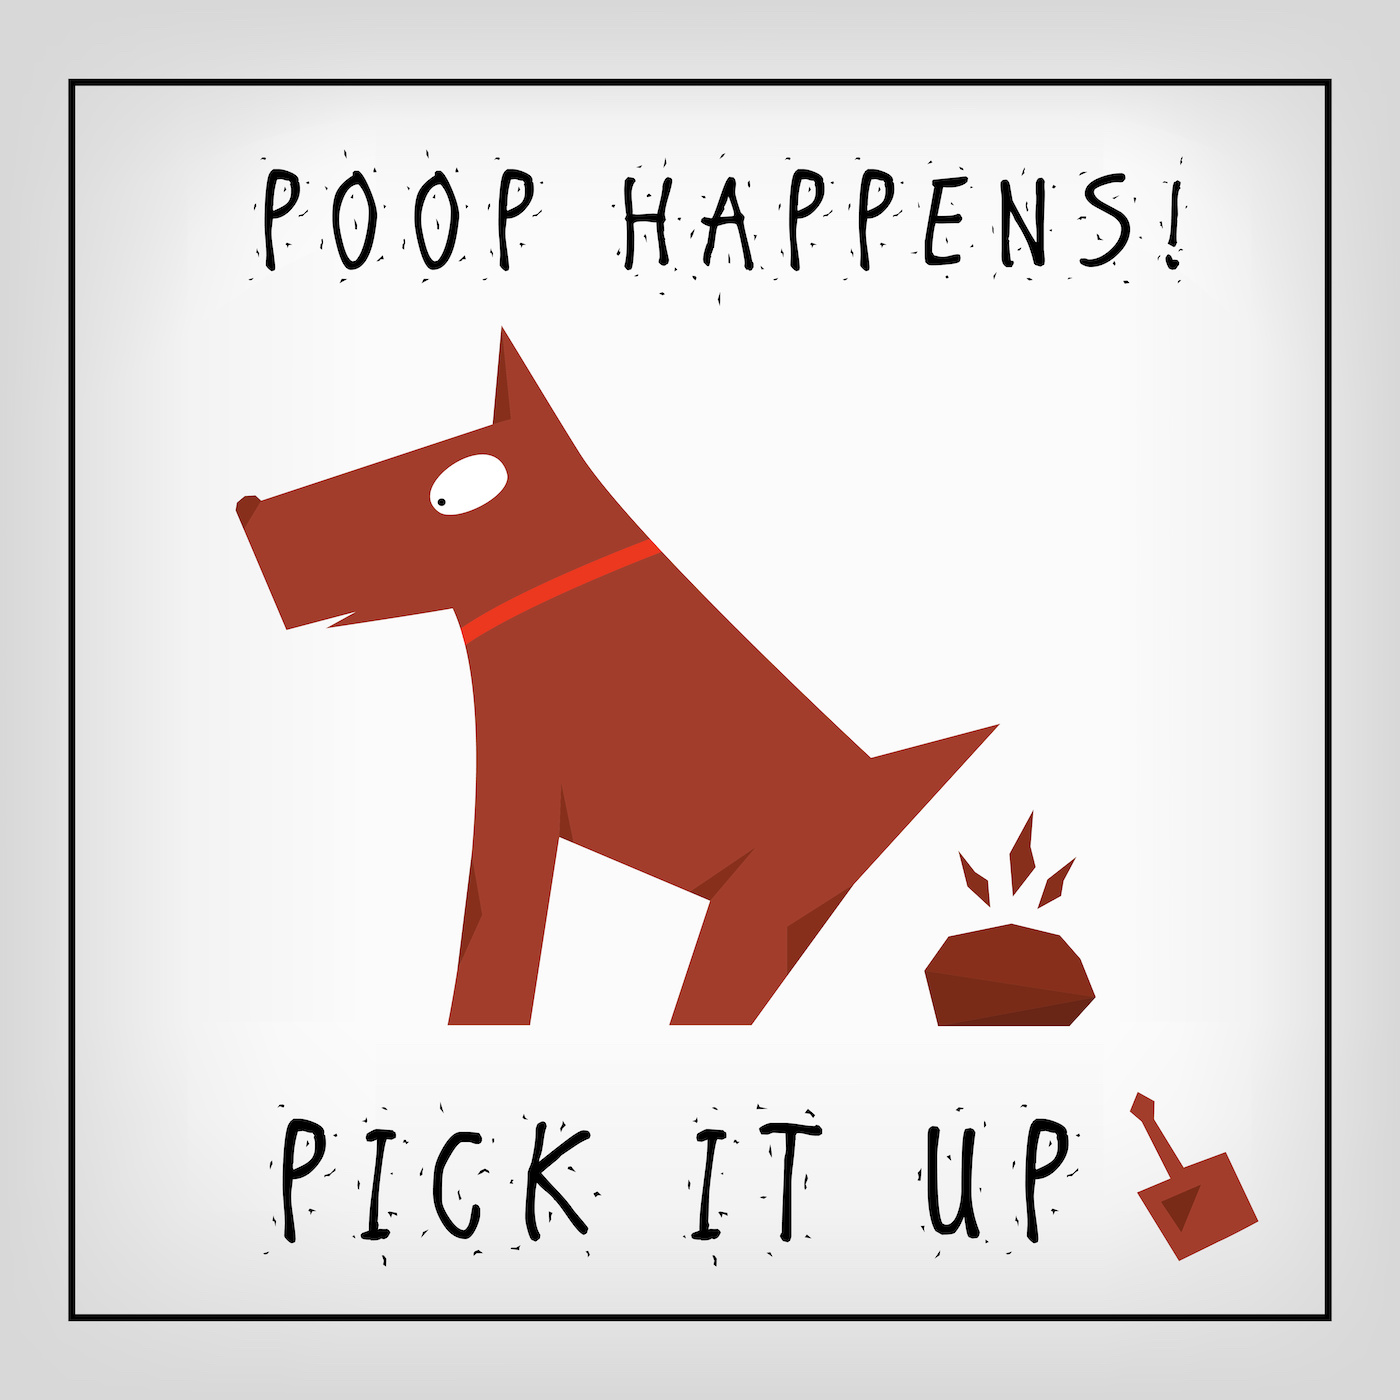 Poop happens – pack it out.